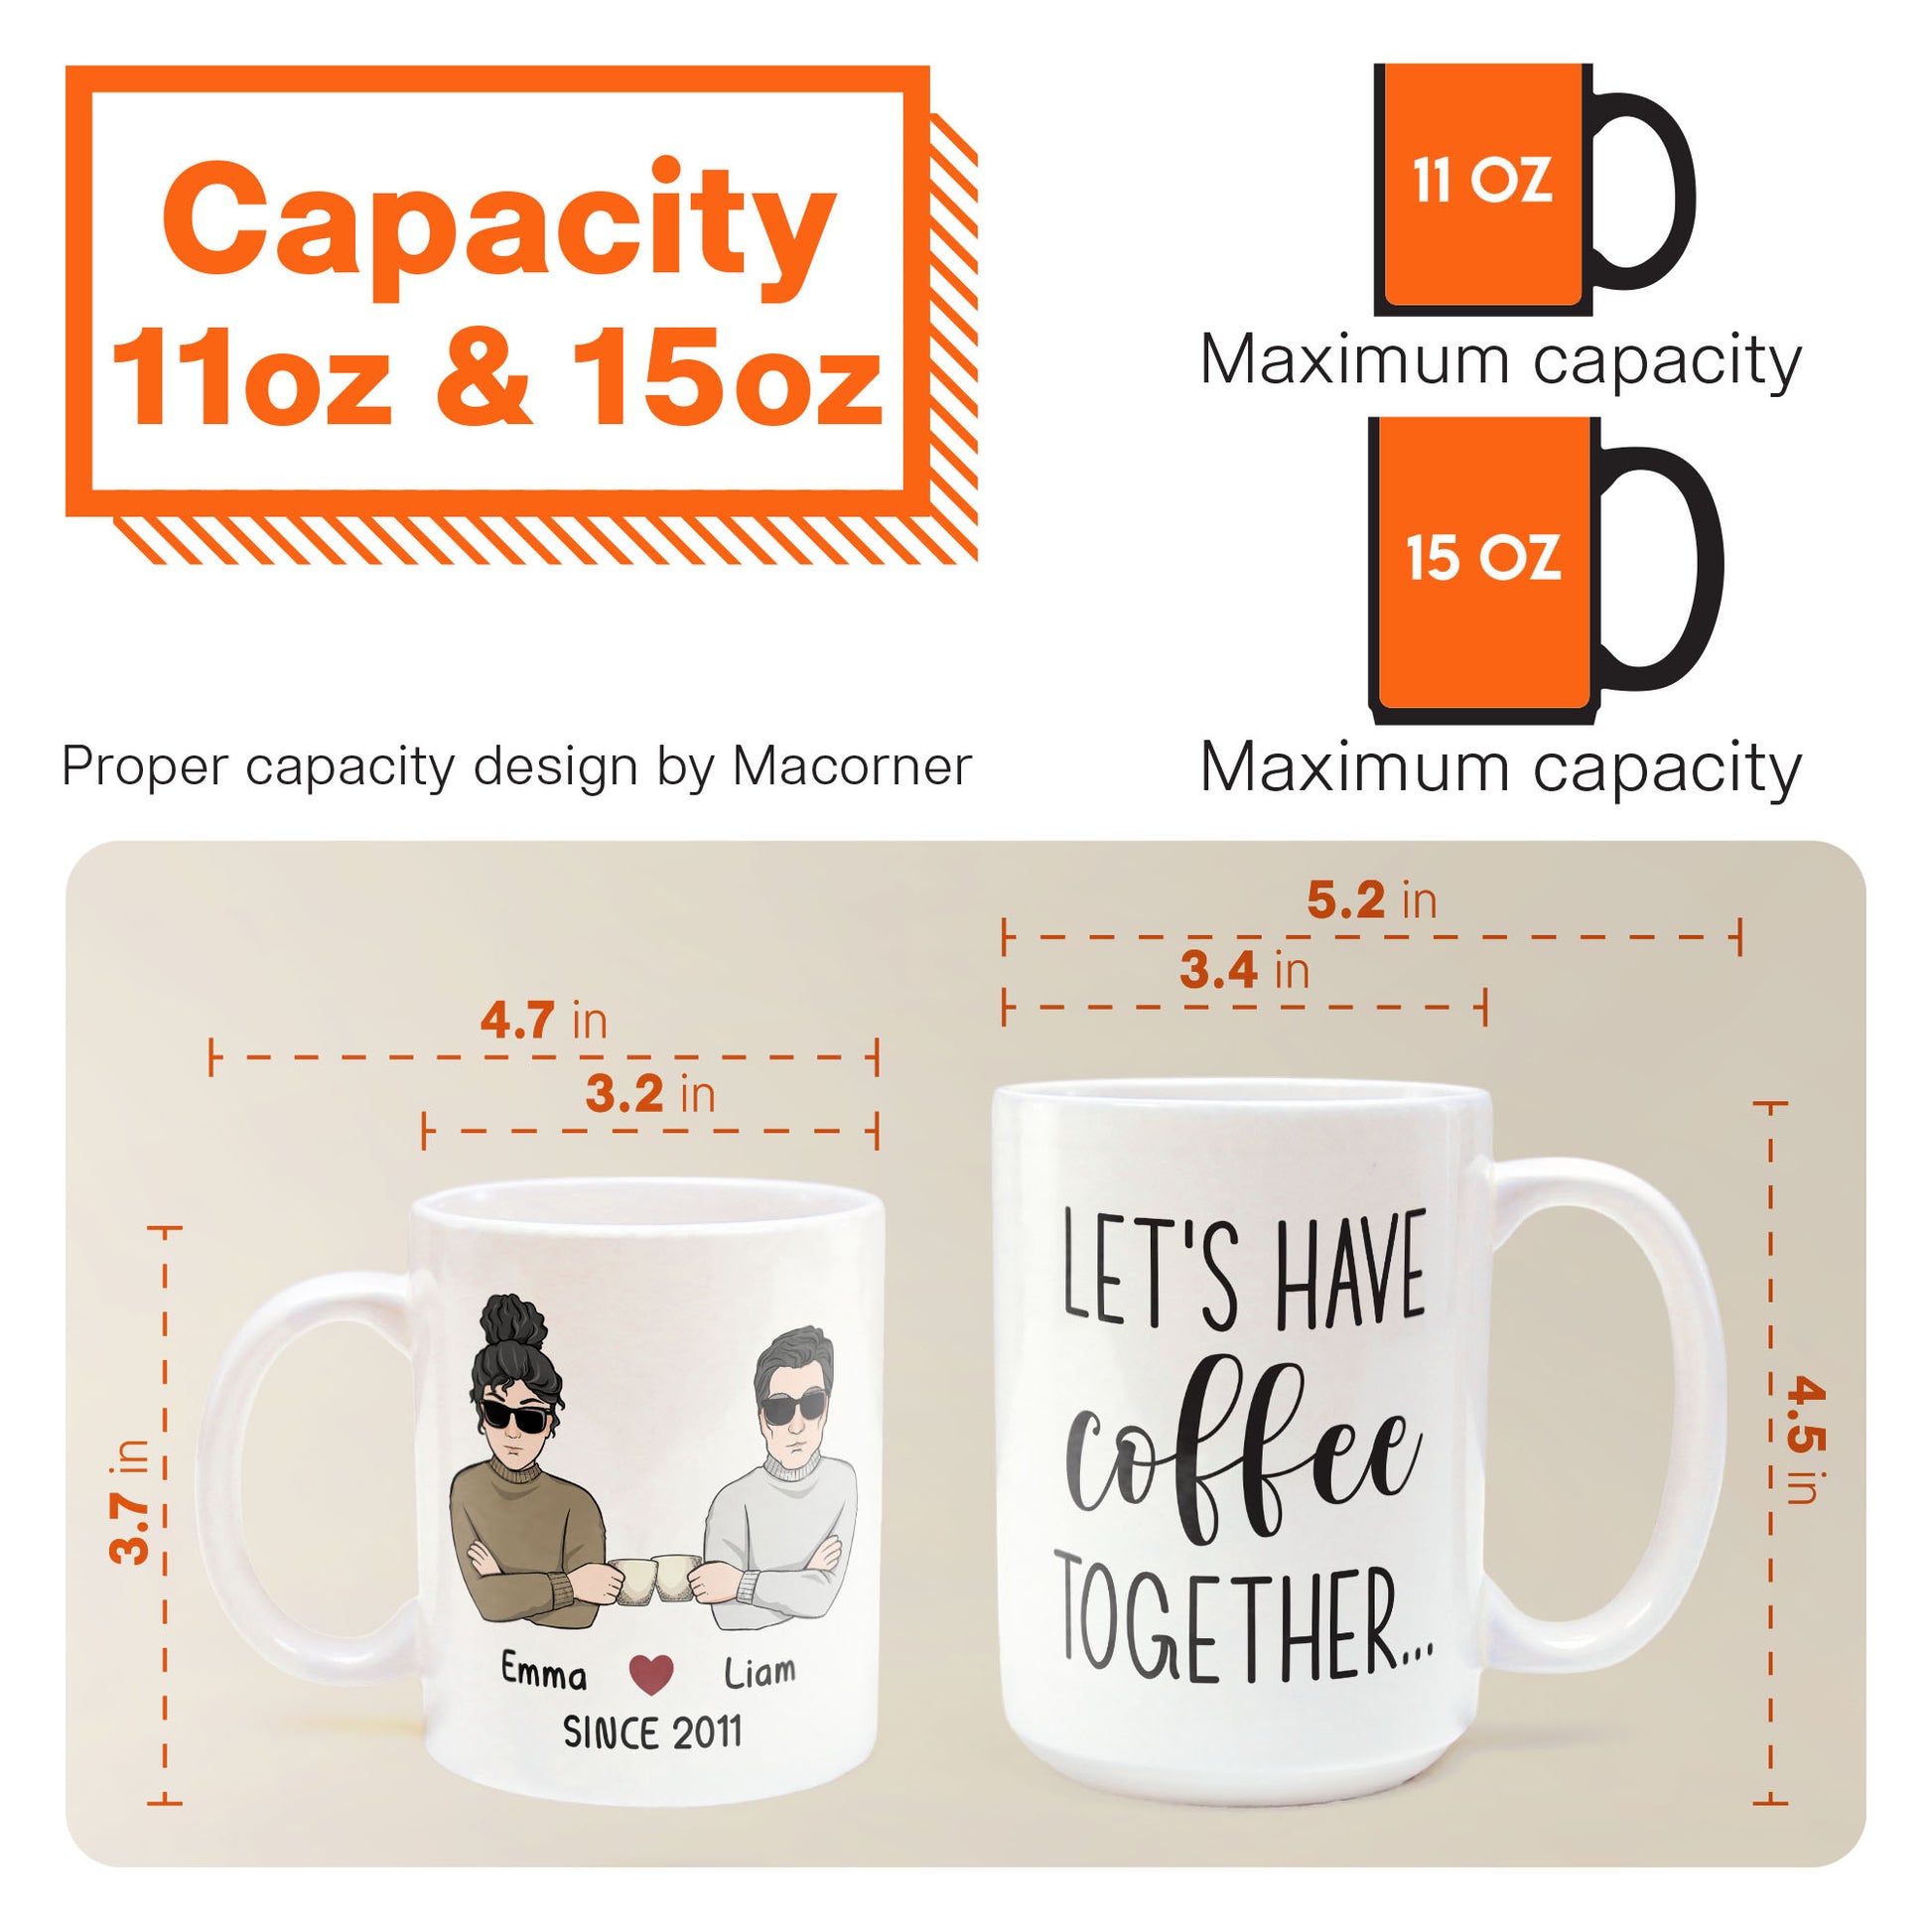 Make Camo Your Cause Coffee Mug - Spouse-ly